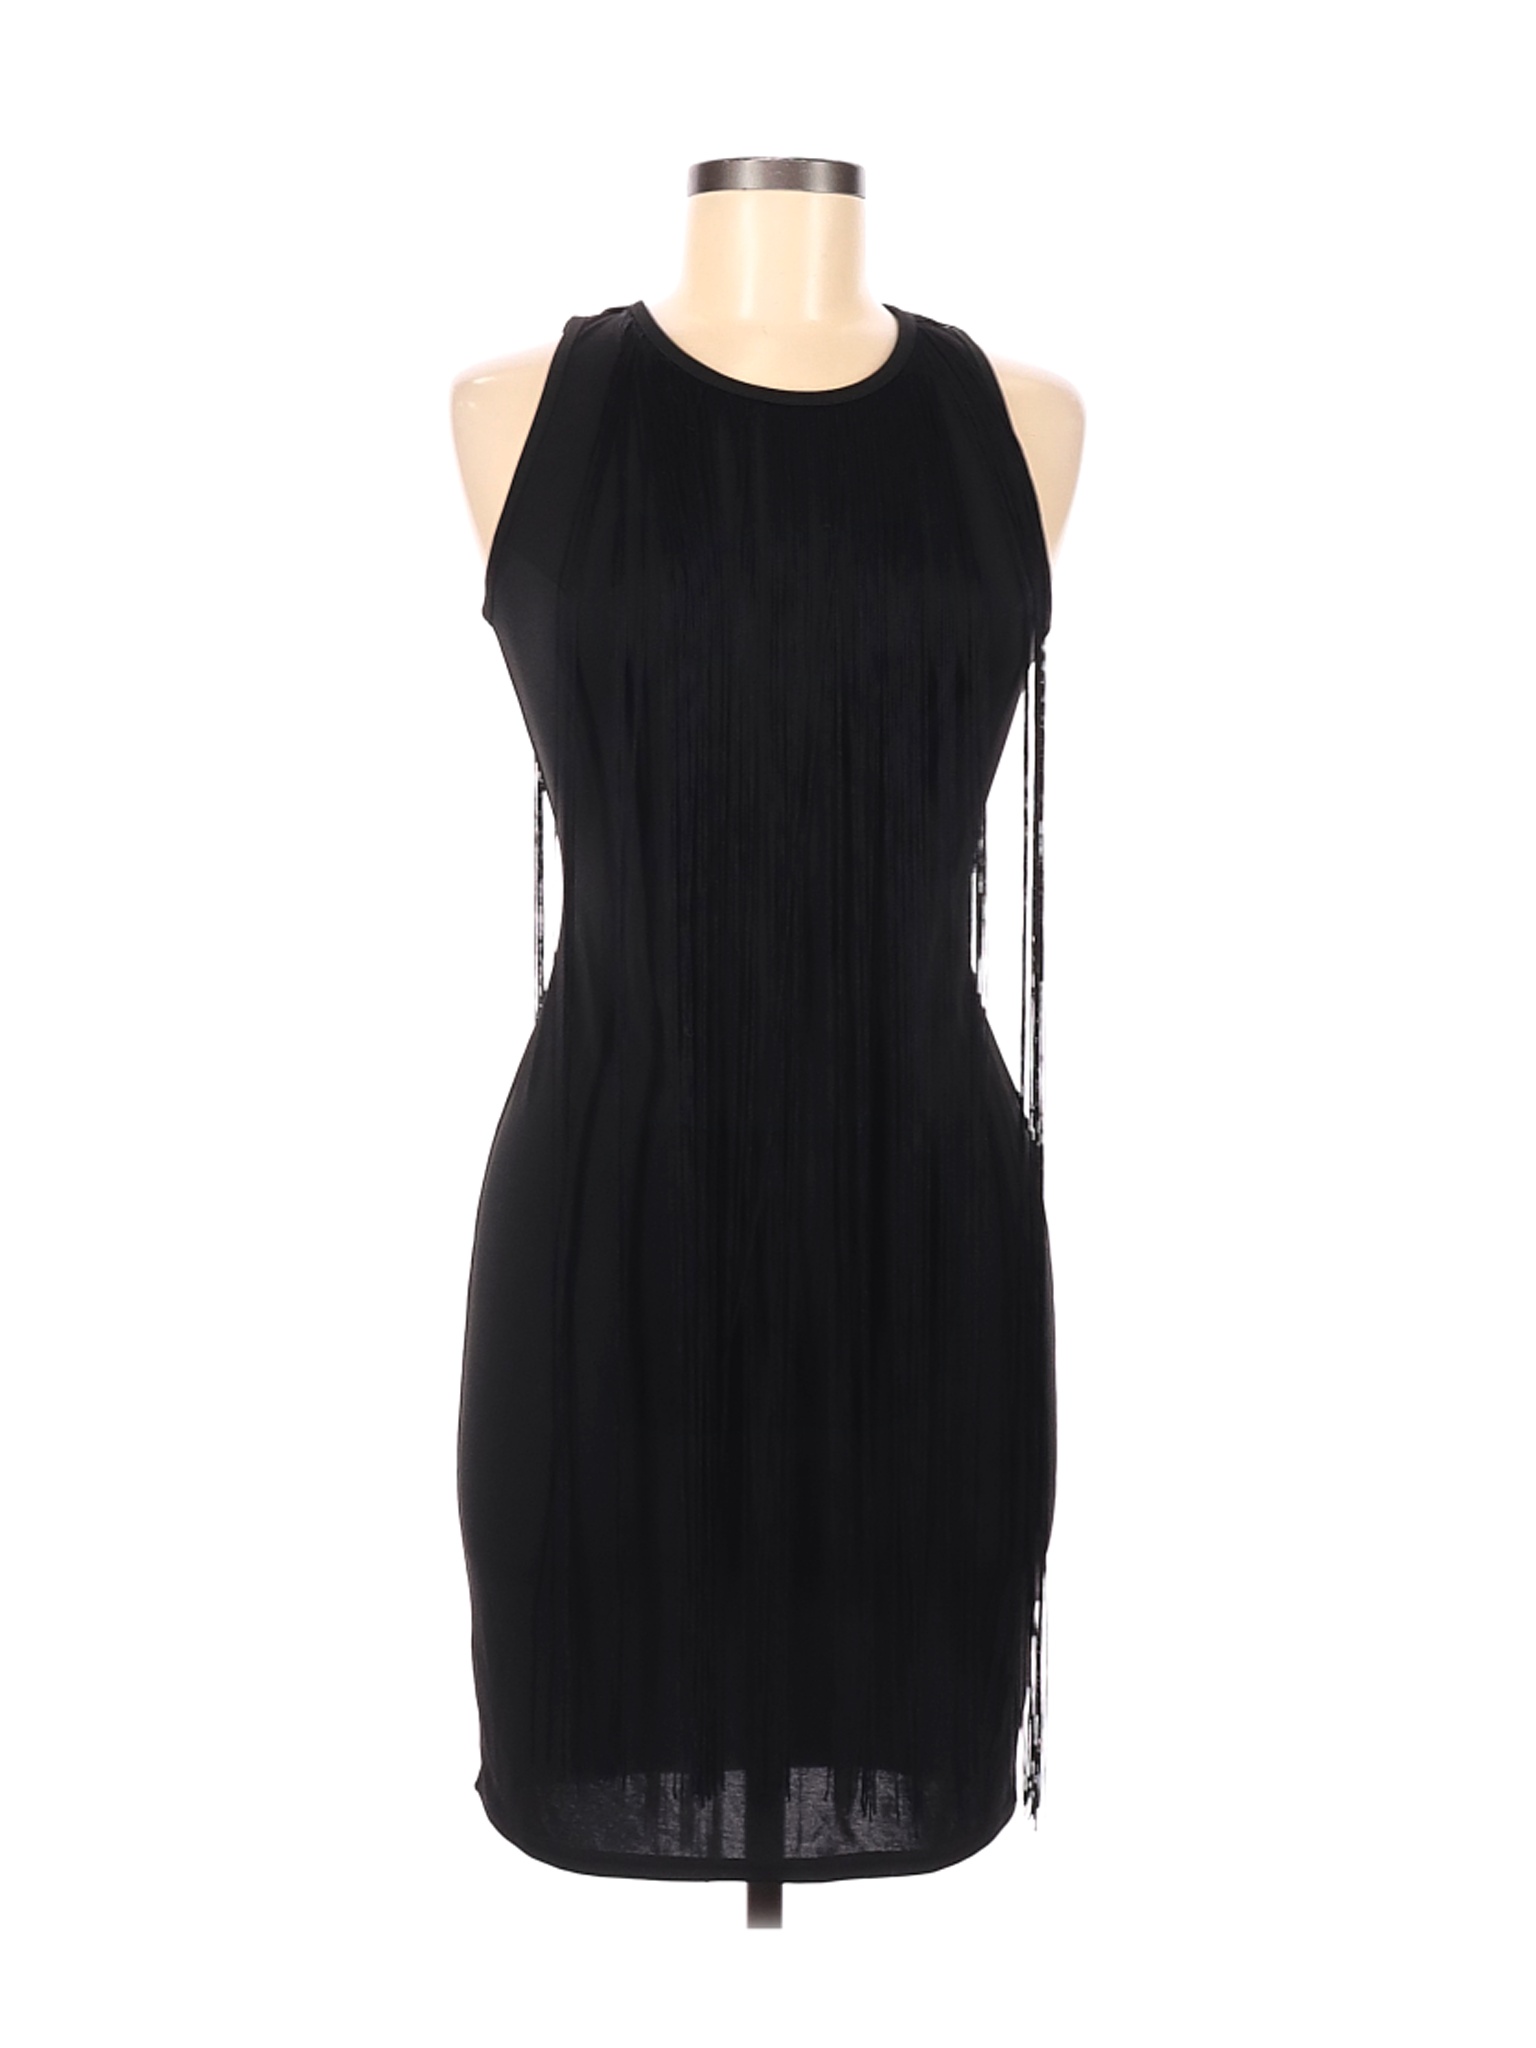 NWT Sam Edelman Women Black Casual Dress M | eBay